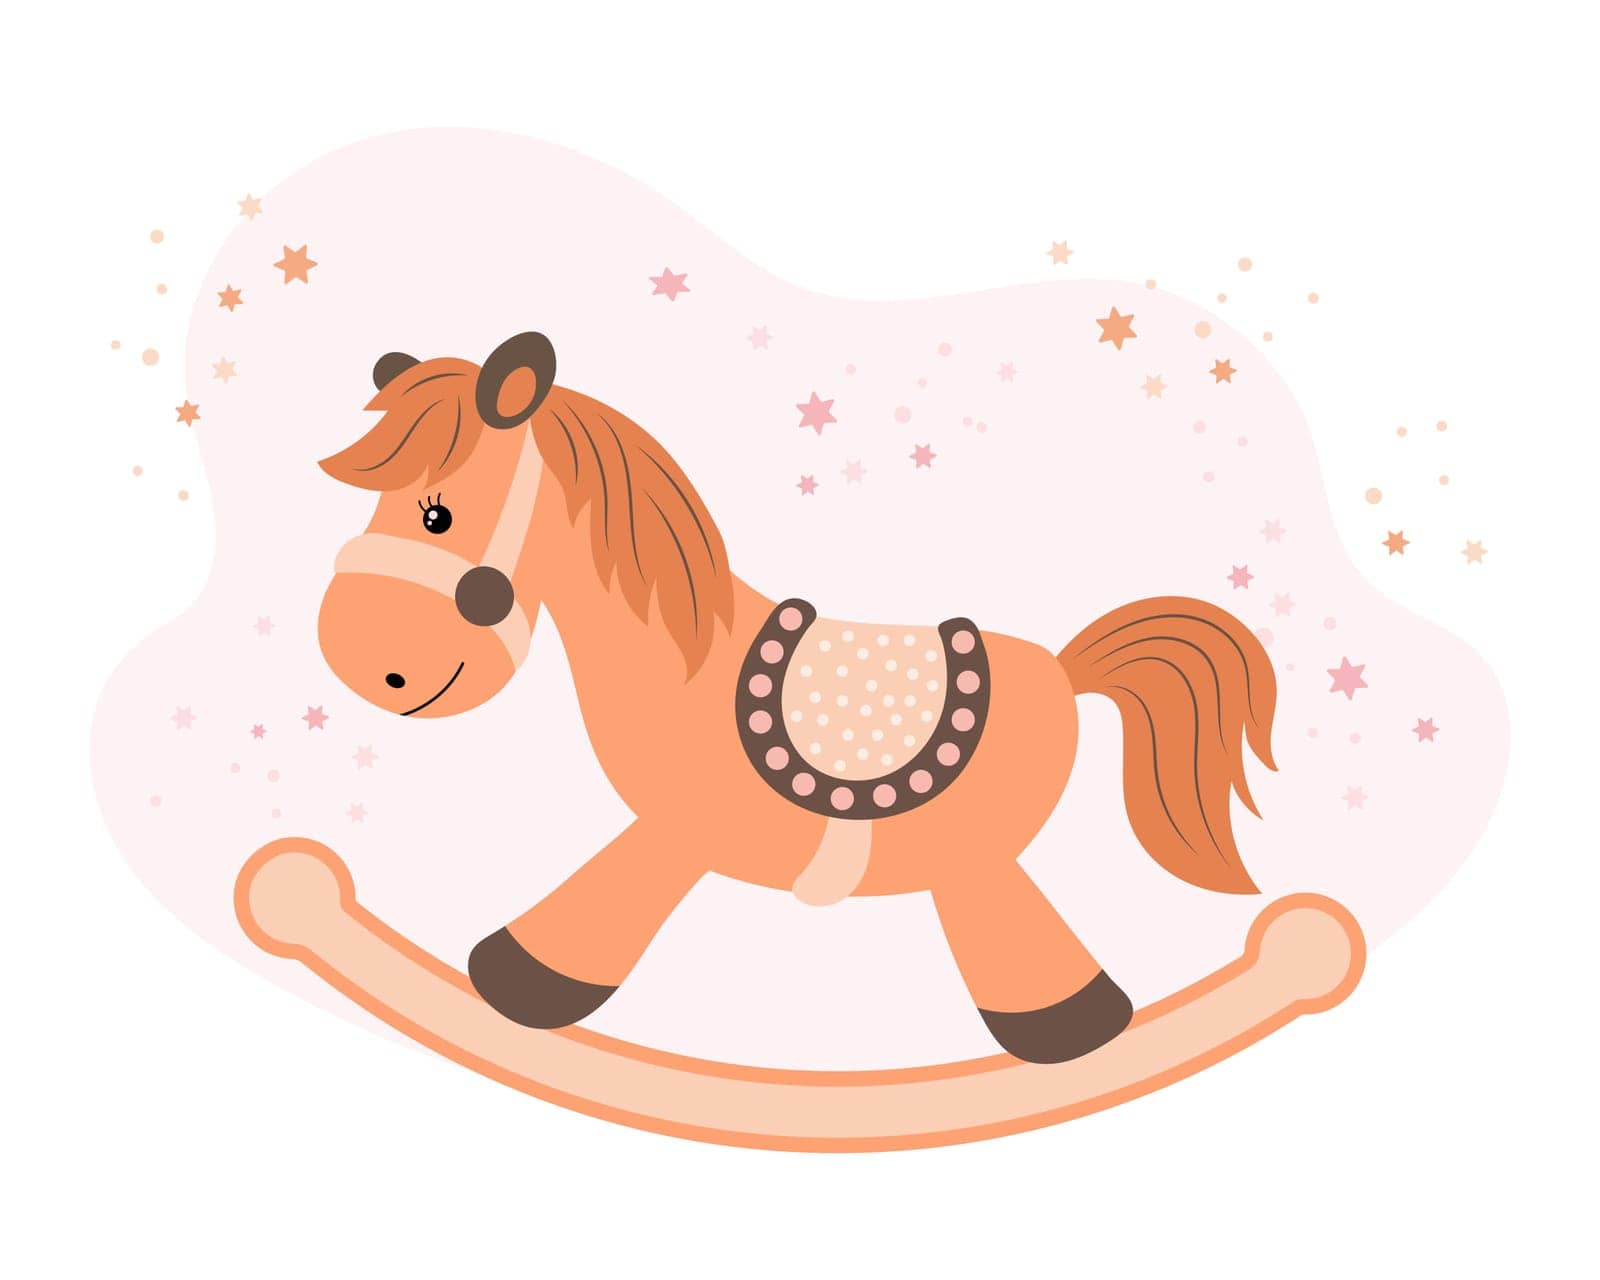 Children's toy rocking horse on a background of stars. Children's card, vector